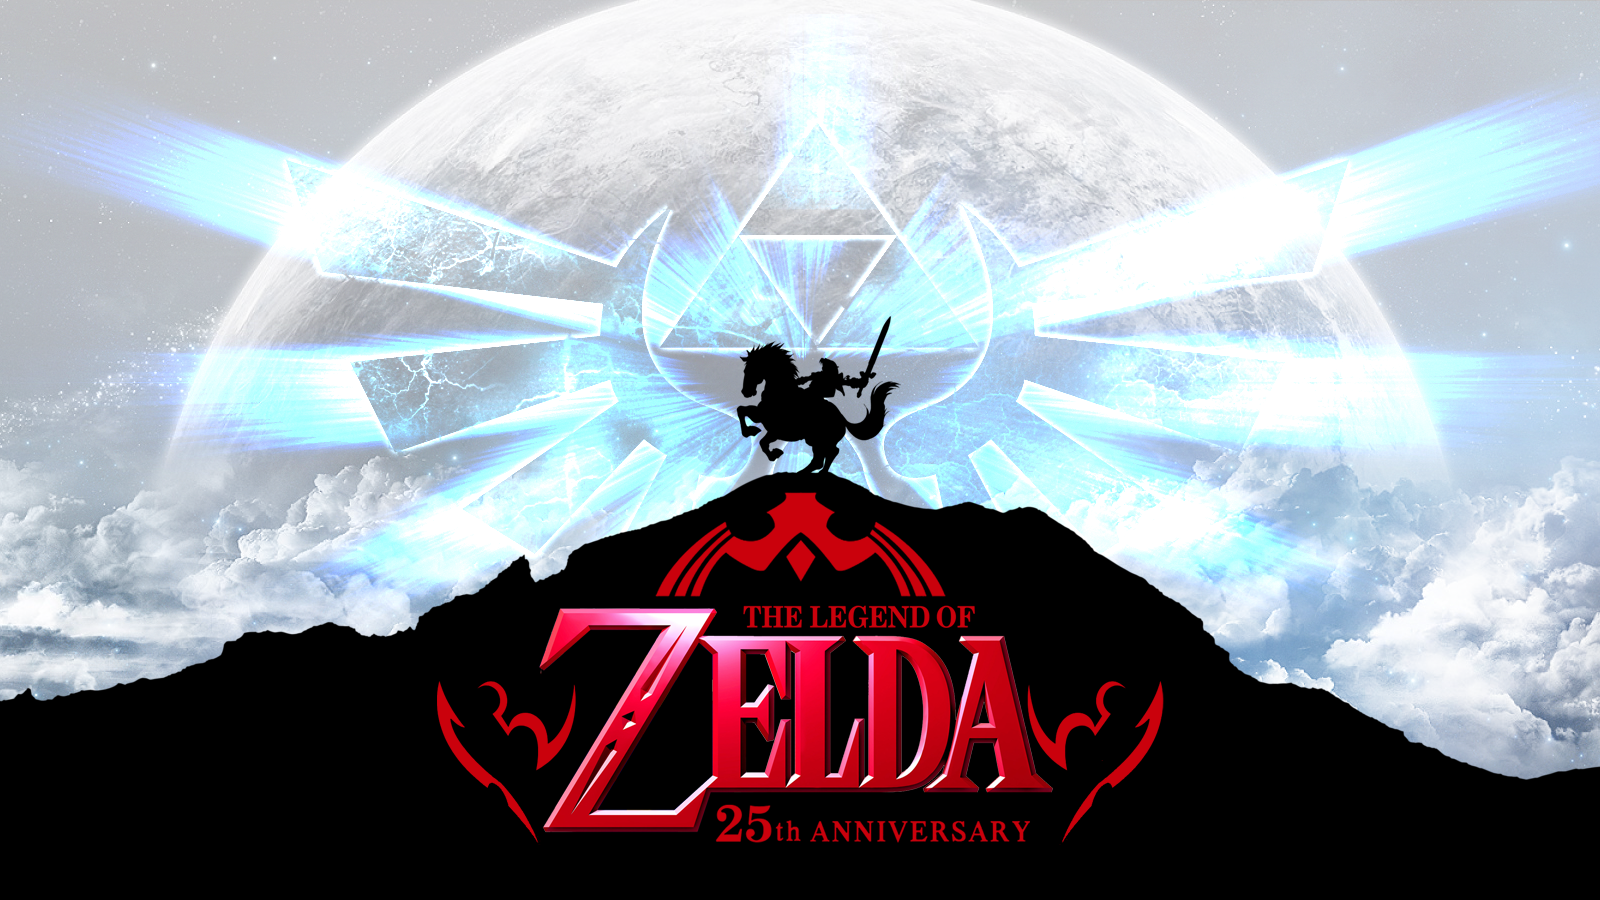 The Legend Of Zelda Backgrounds Group (88+)